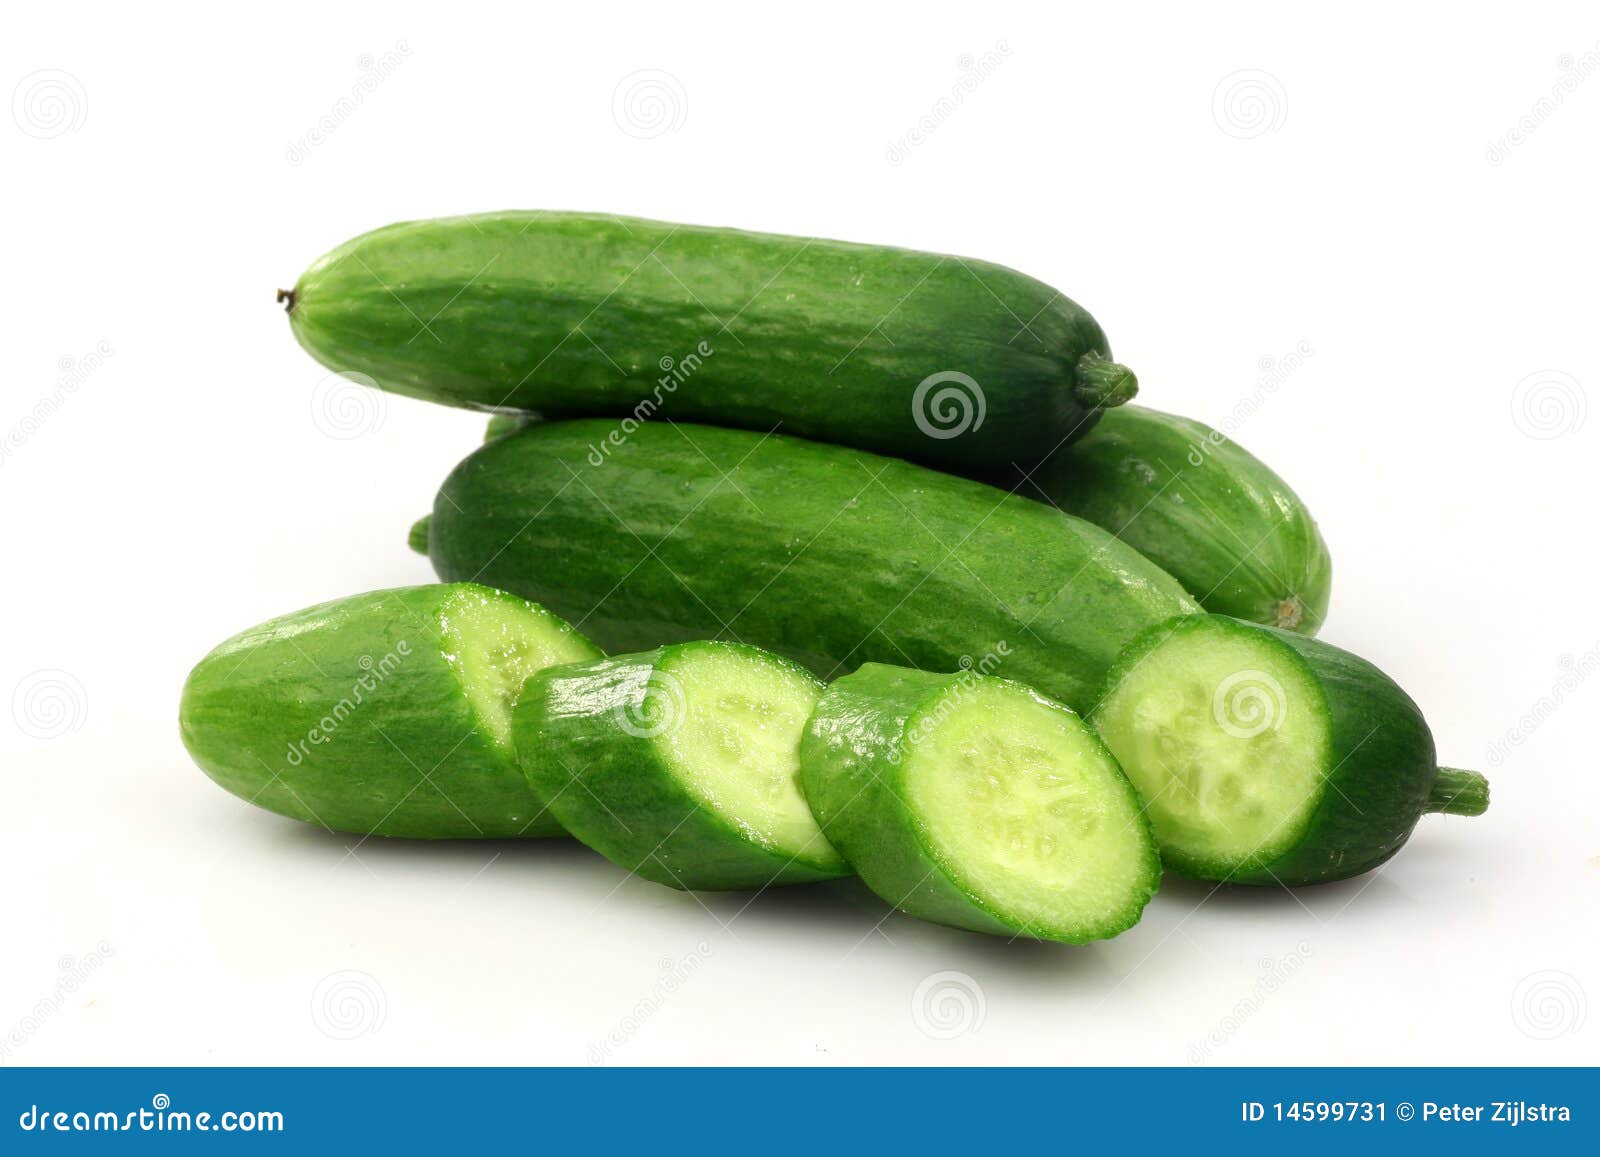 https://thumbs.dreamstime.com/z/fresh-green-cut-baby-cucumbers-14599731.jpg